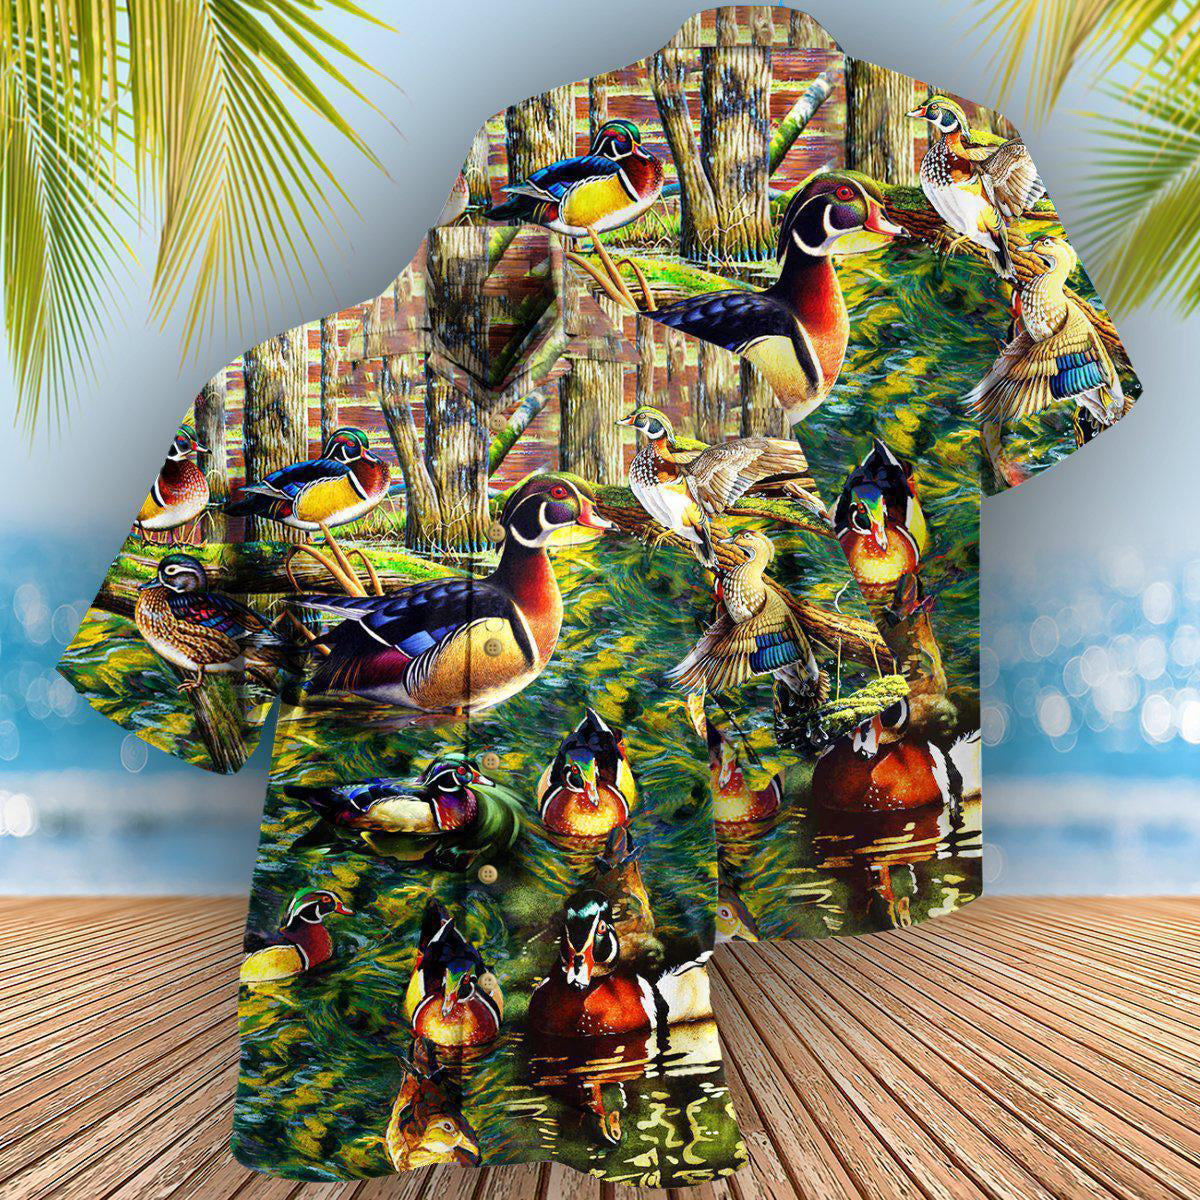 Duck Welcome To The Duck Side - Hawaiian Shirt - Owls Matrix LTD